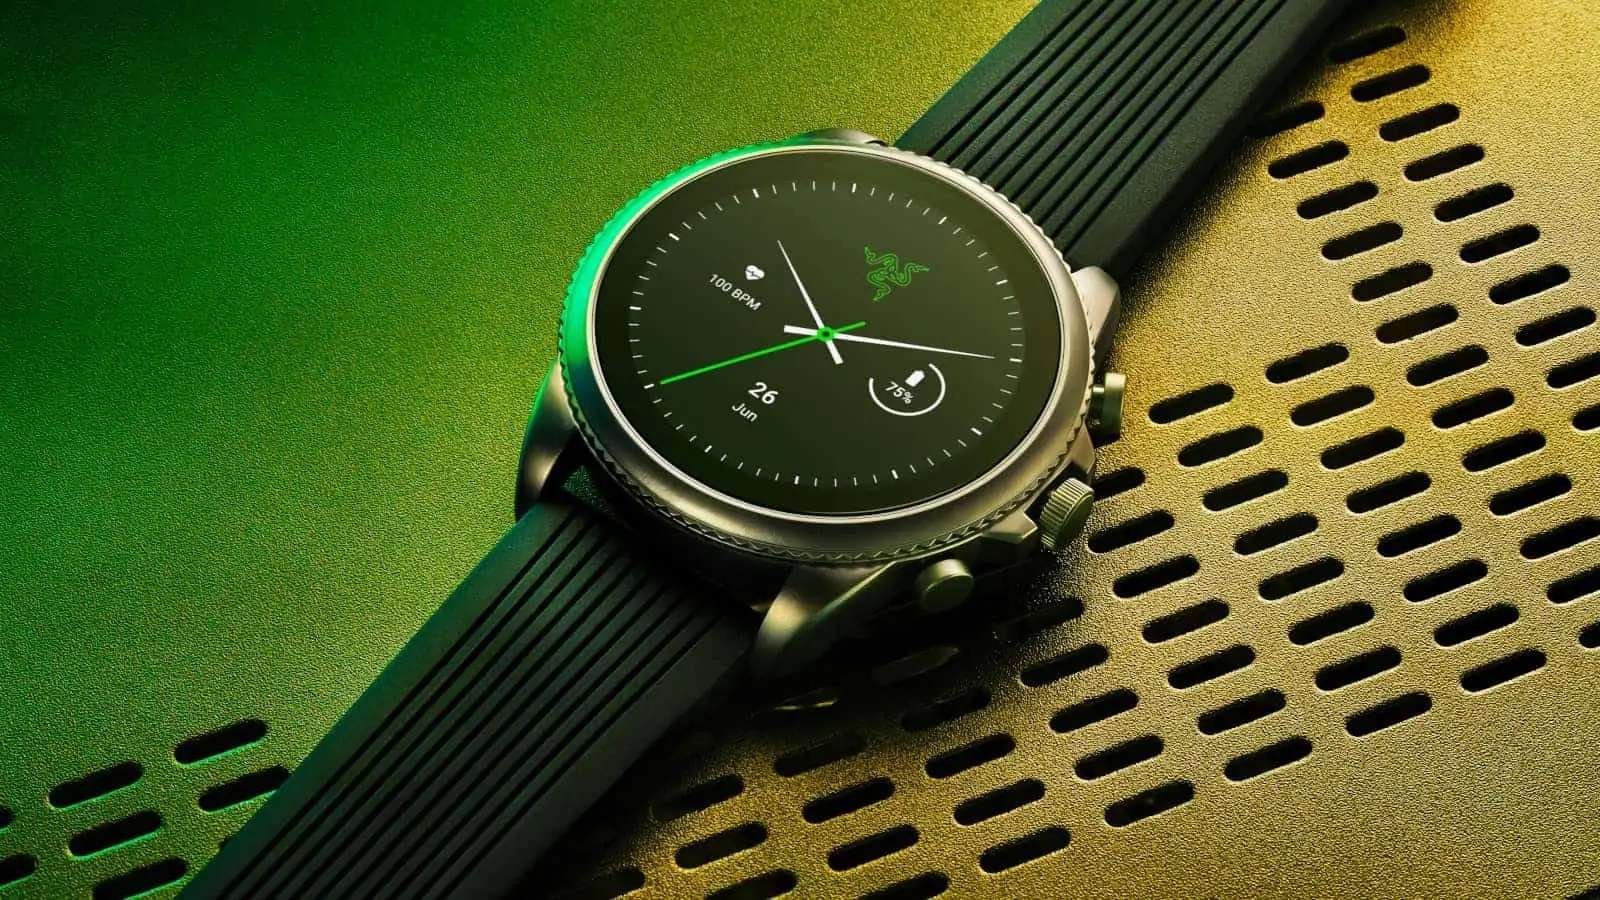 Fossil implementerà Alexa a bordo dei suoi smartwatch Wear OS